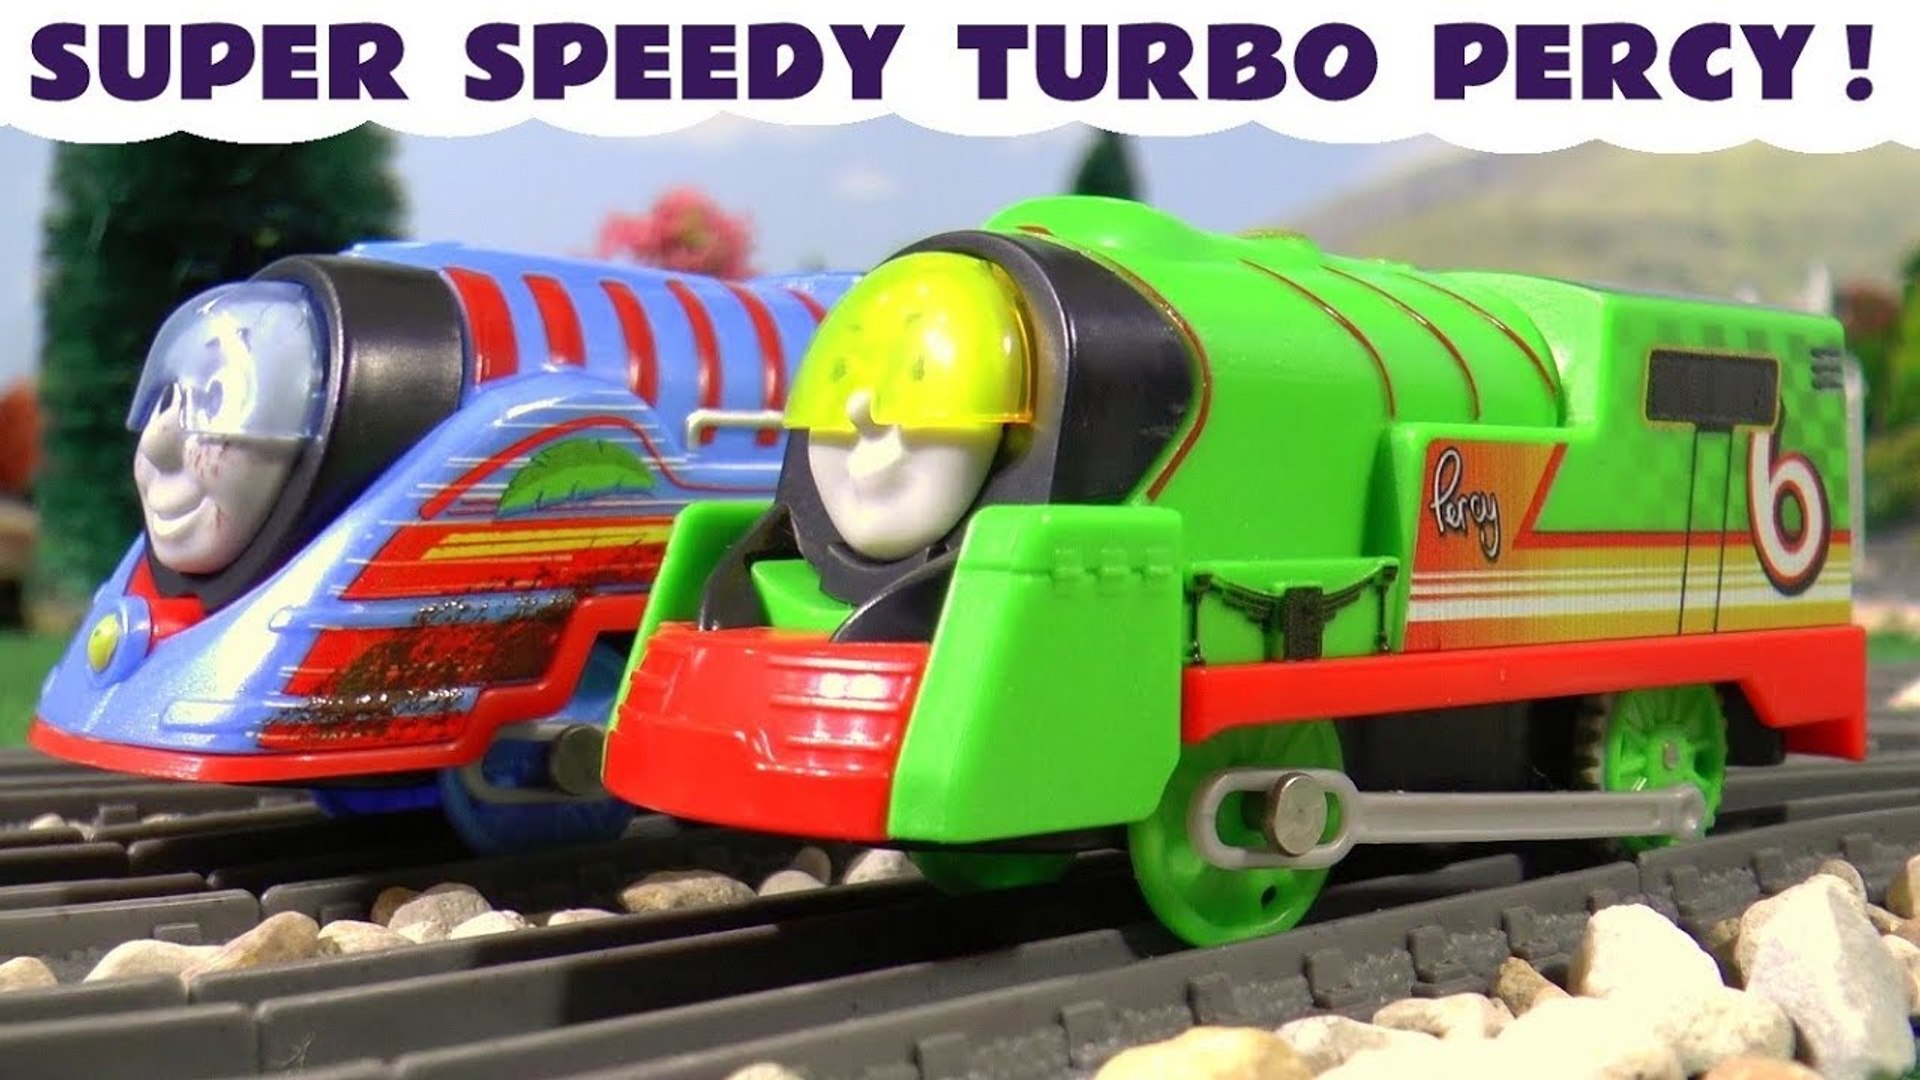 turbo percy